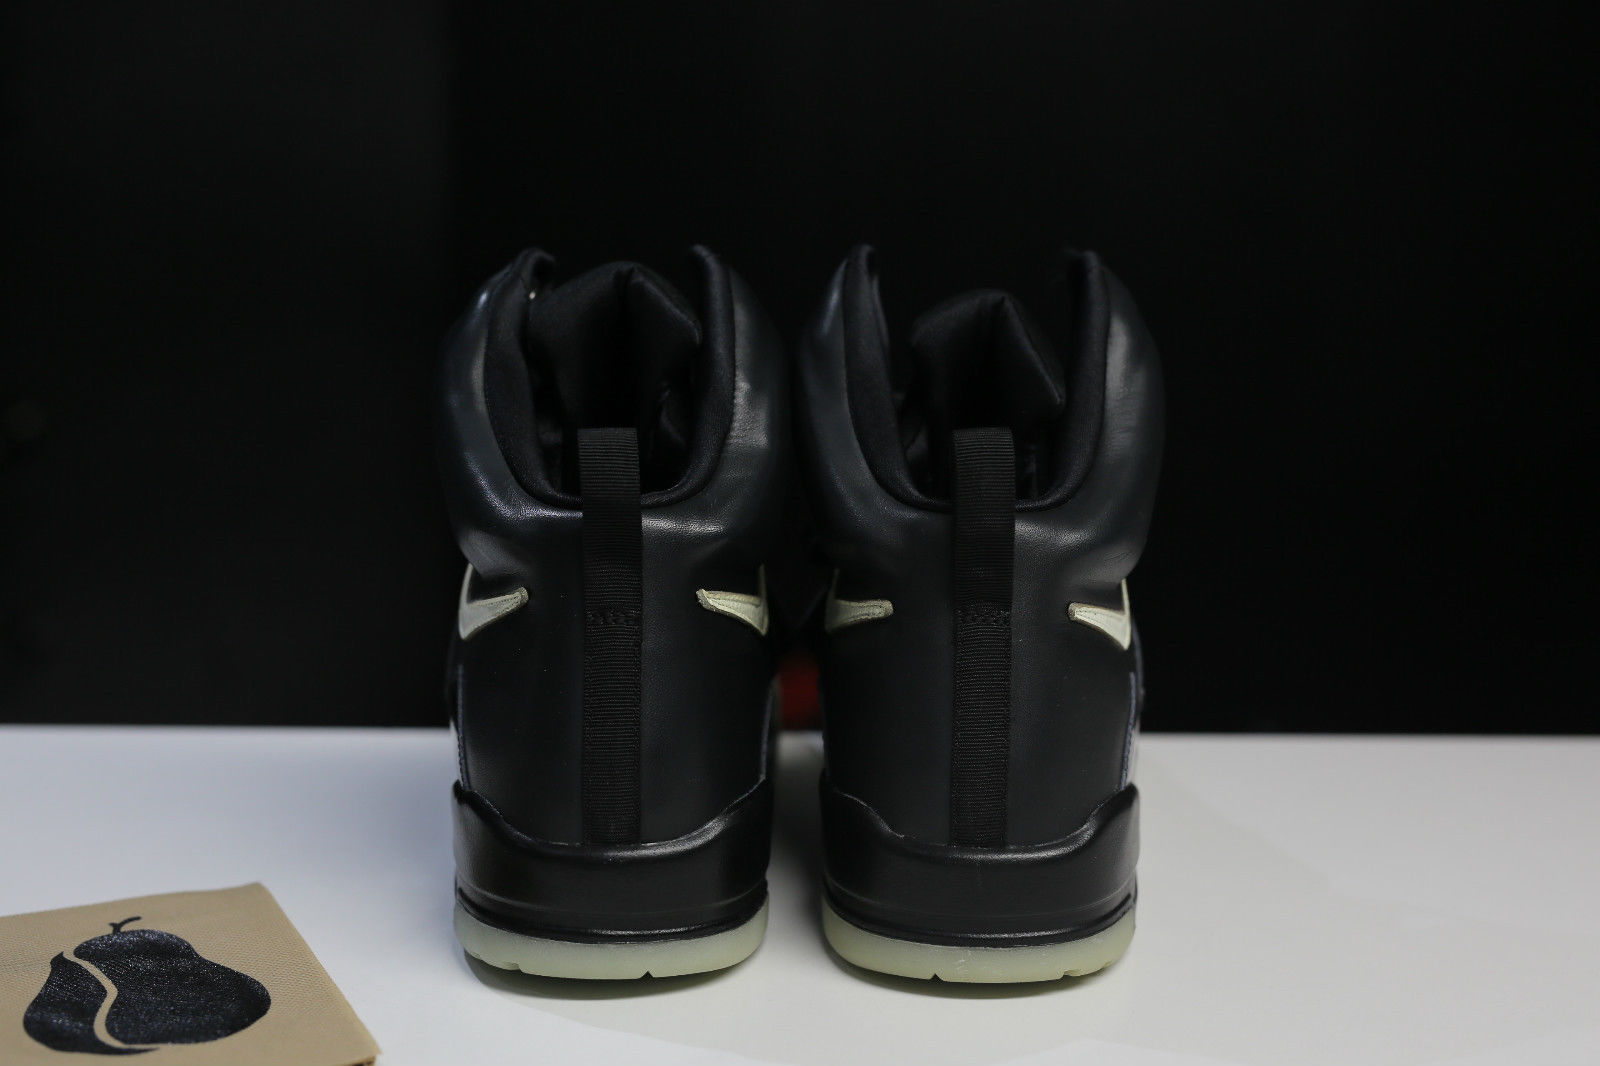 Nike Air Yeezy Kanye West Black/White Sample Heel